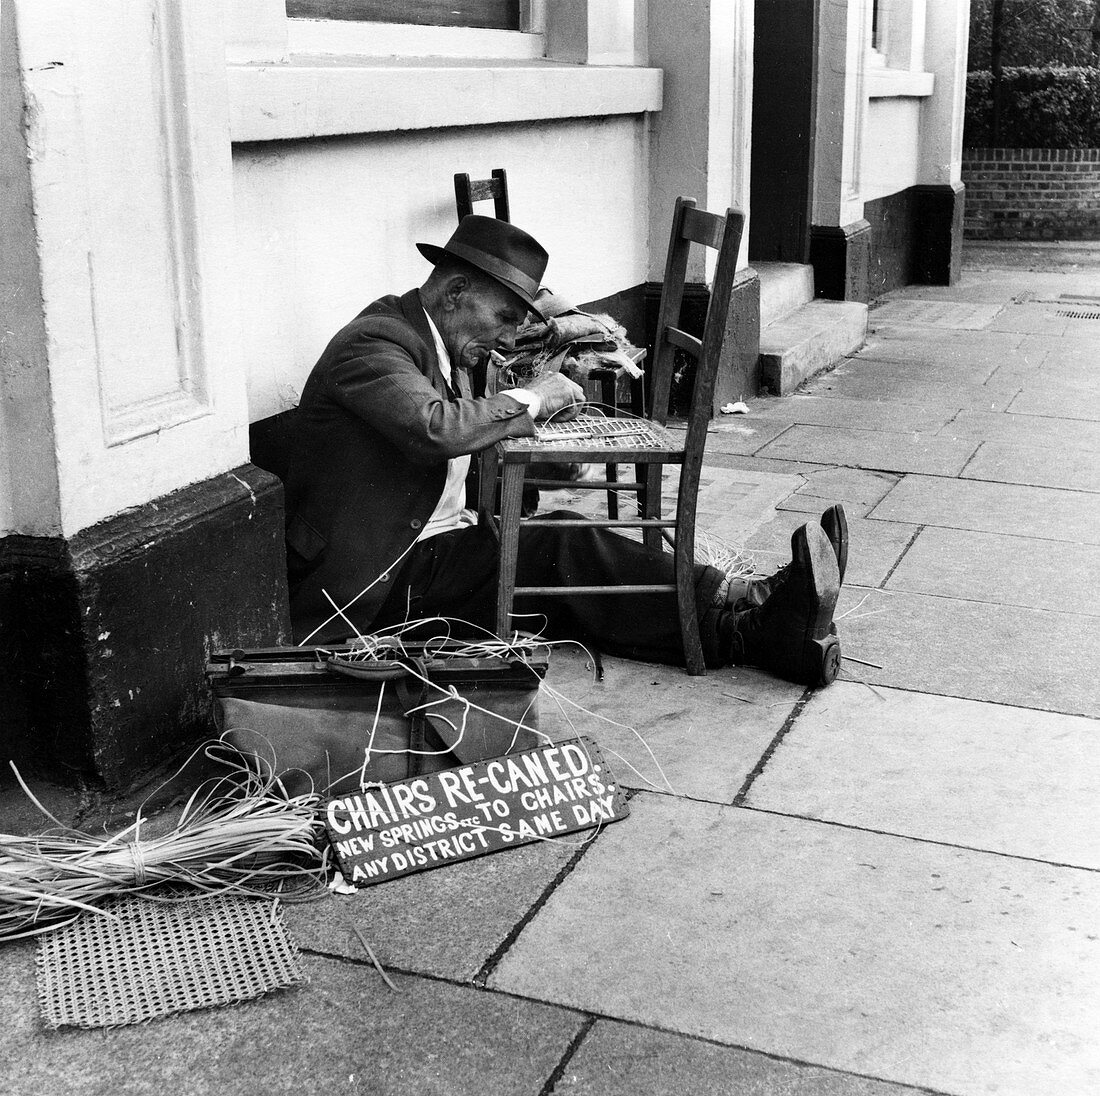 Man mending a chair on an East End street, London, 1950s